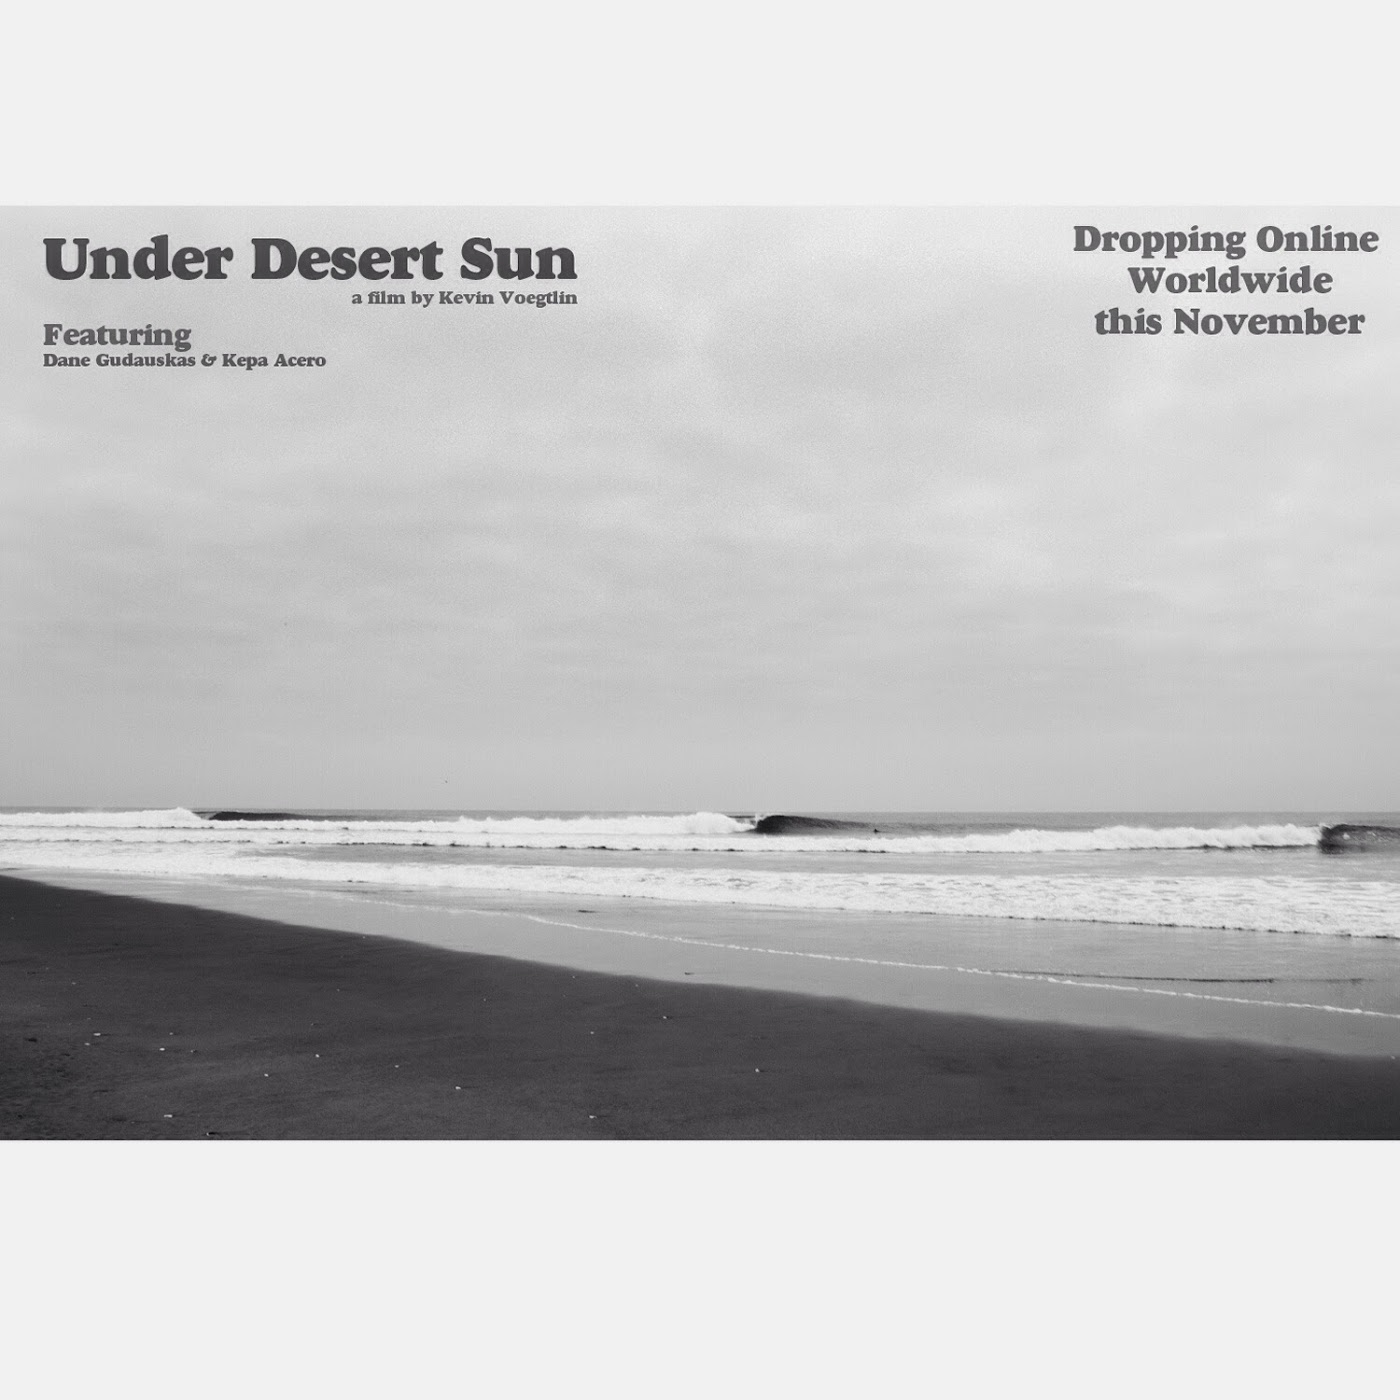 Under Desert Sun premieres in Barcelona | Kepa Acero & Dane Gudauskas in Angola